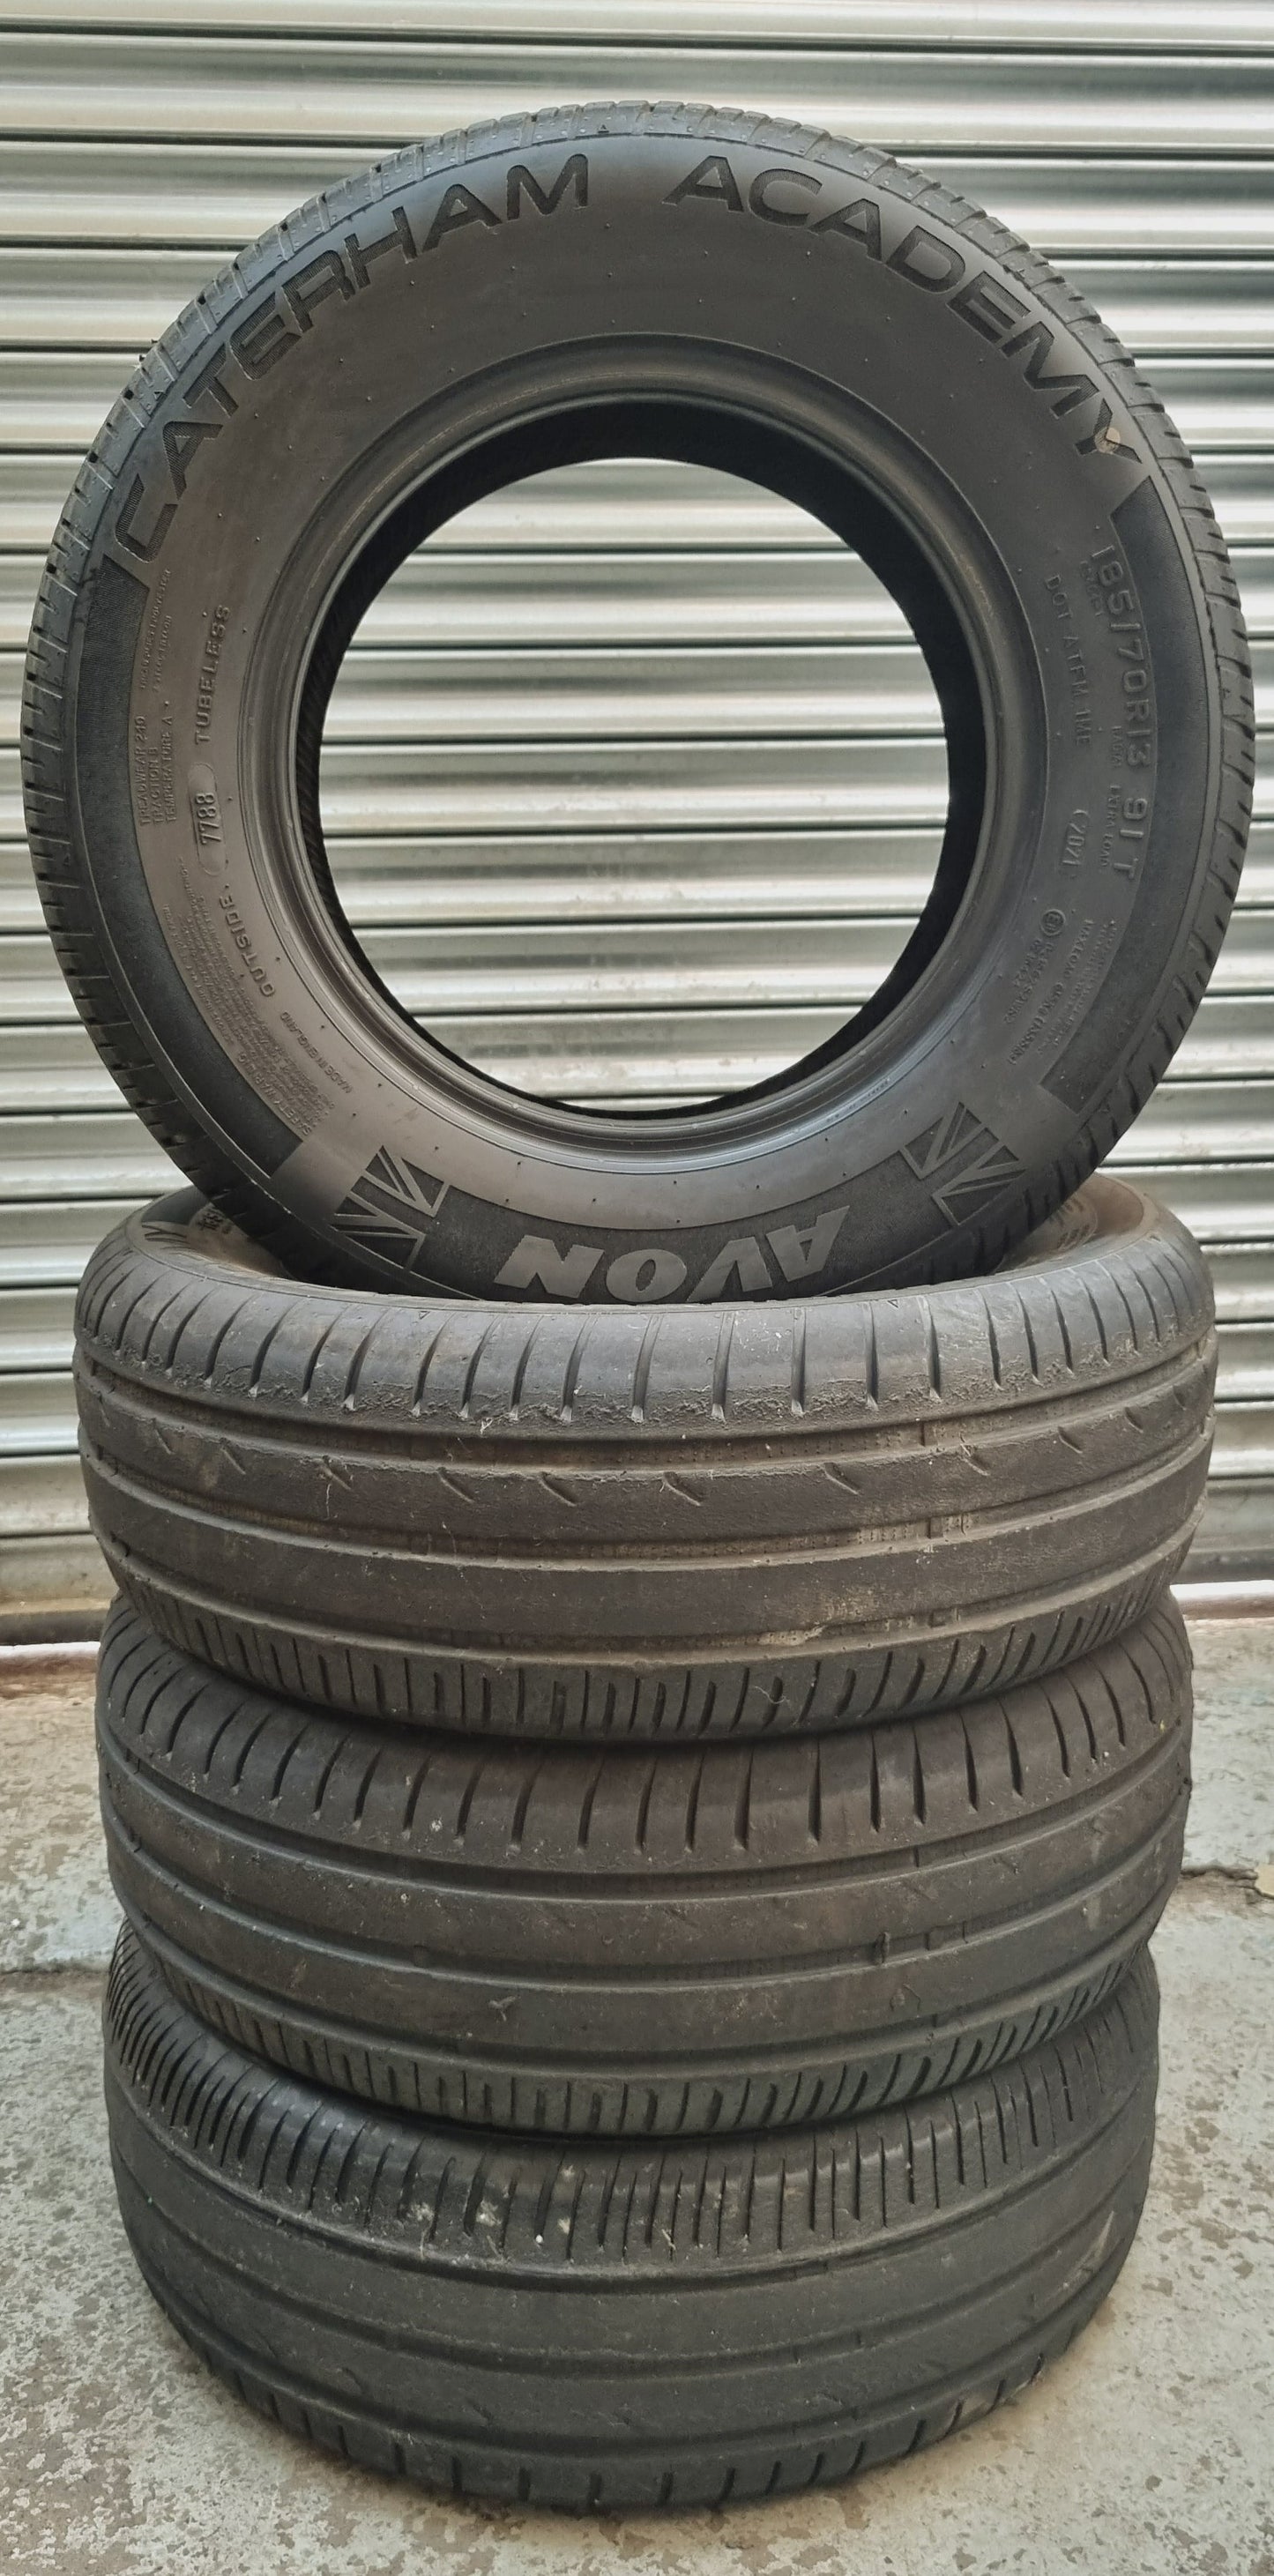 Avon Caterham Academy 185/70/13 Road Legal Track Tyres